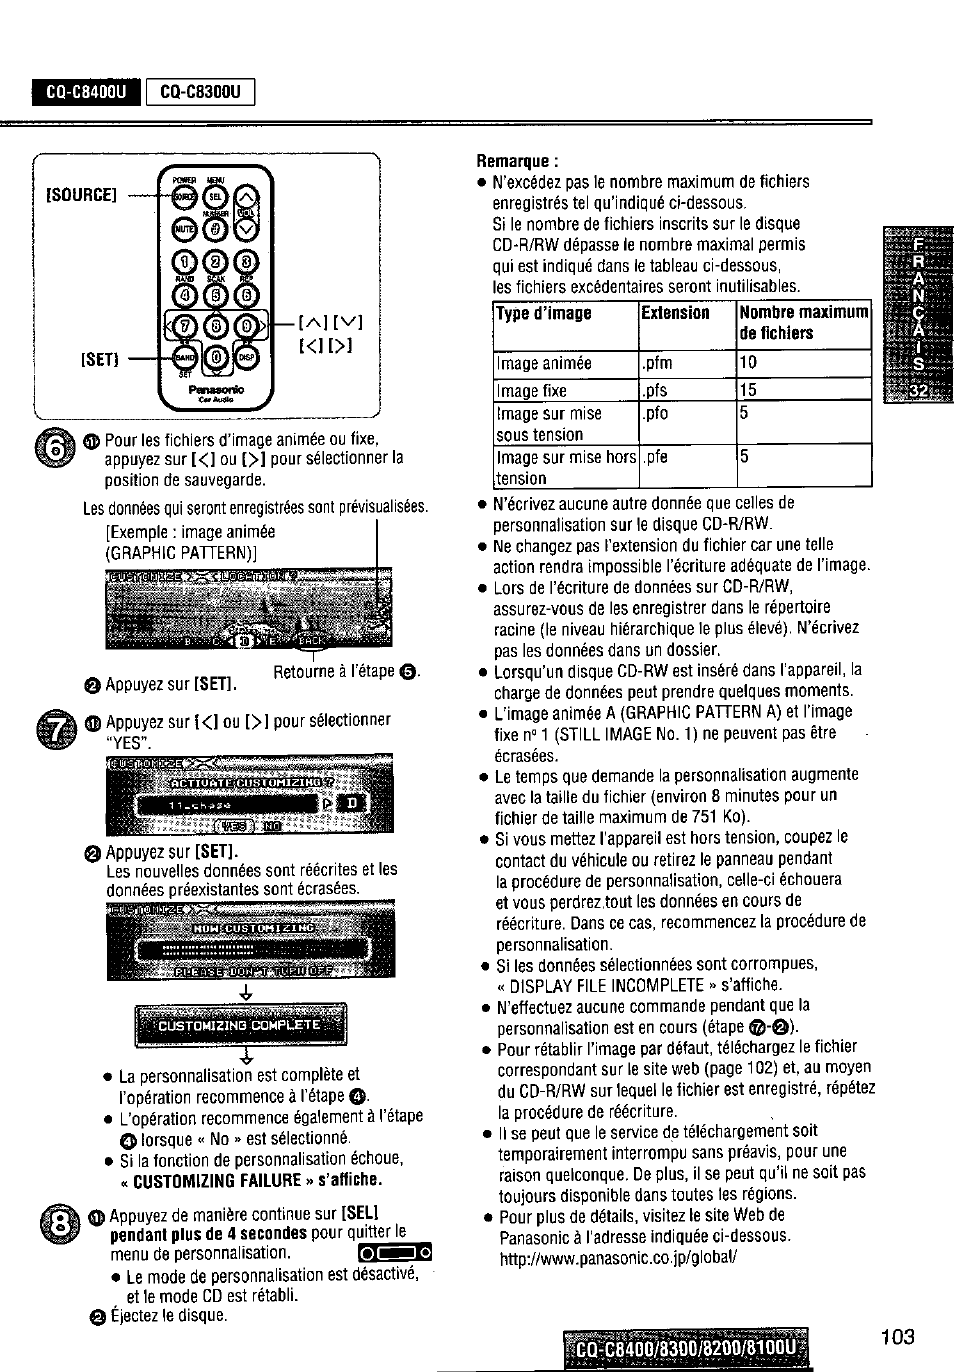 Cq-c8400u, Remarque, P1=e | Panasonic CQ-C8300U User Manual | Page 103 / 176